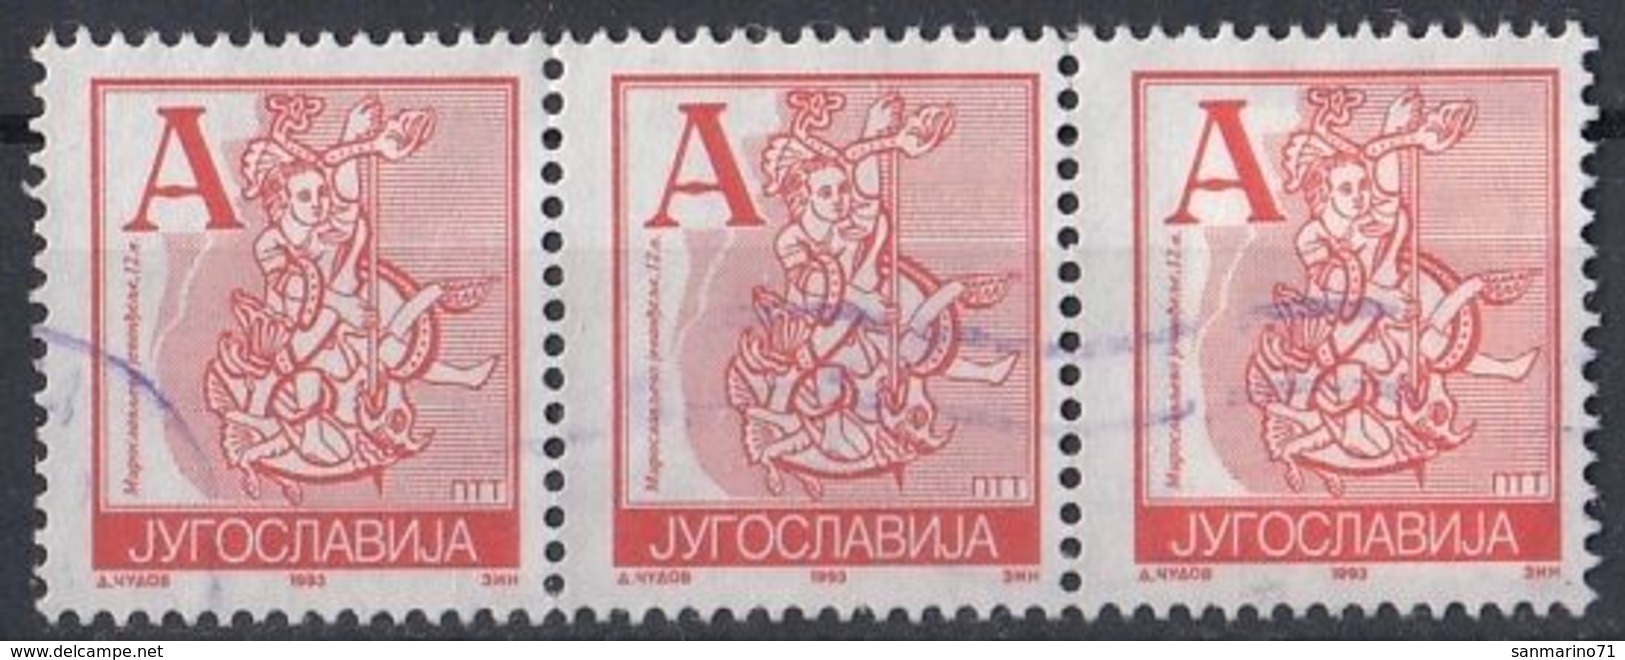 YUGOSLAVIA 2601,used - Gebraucht